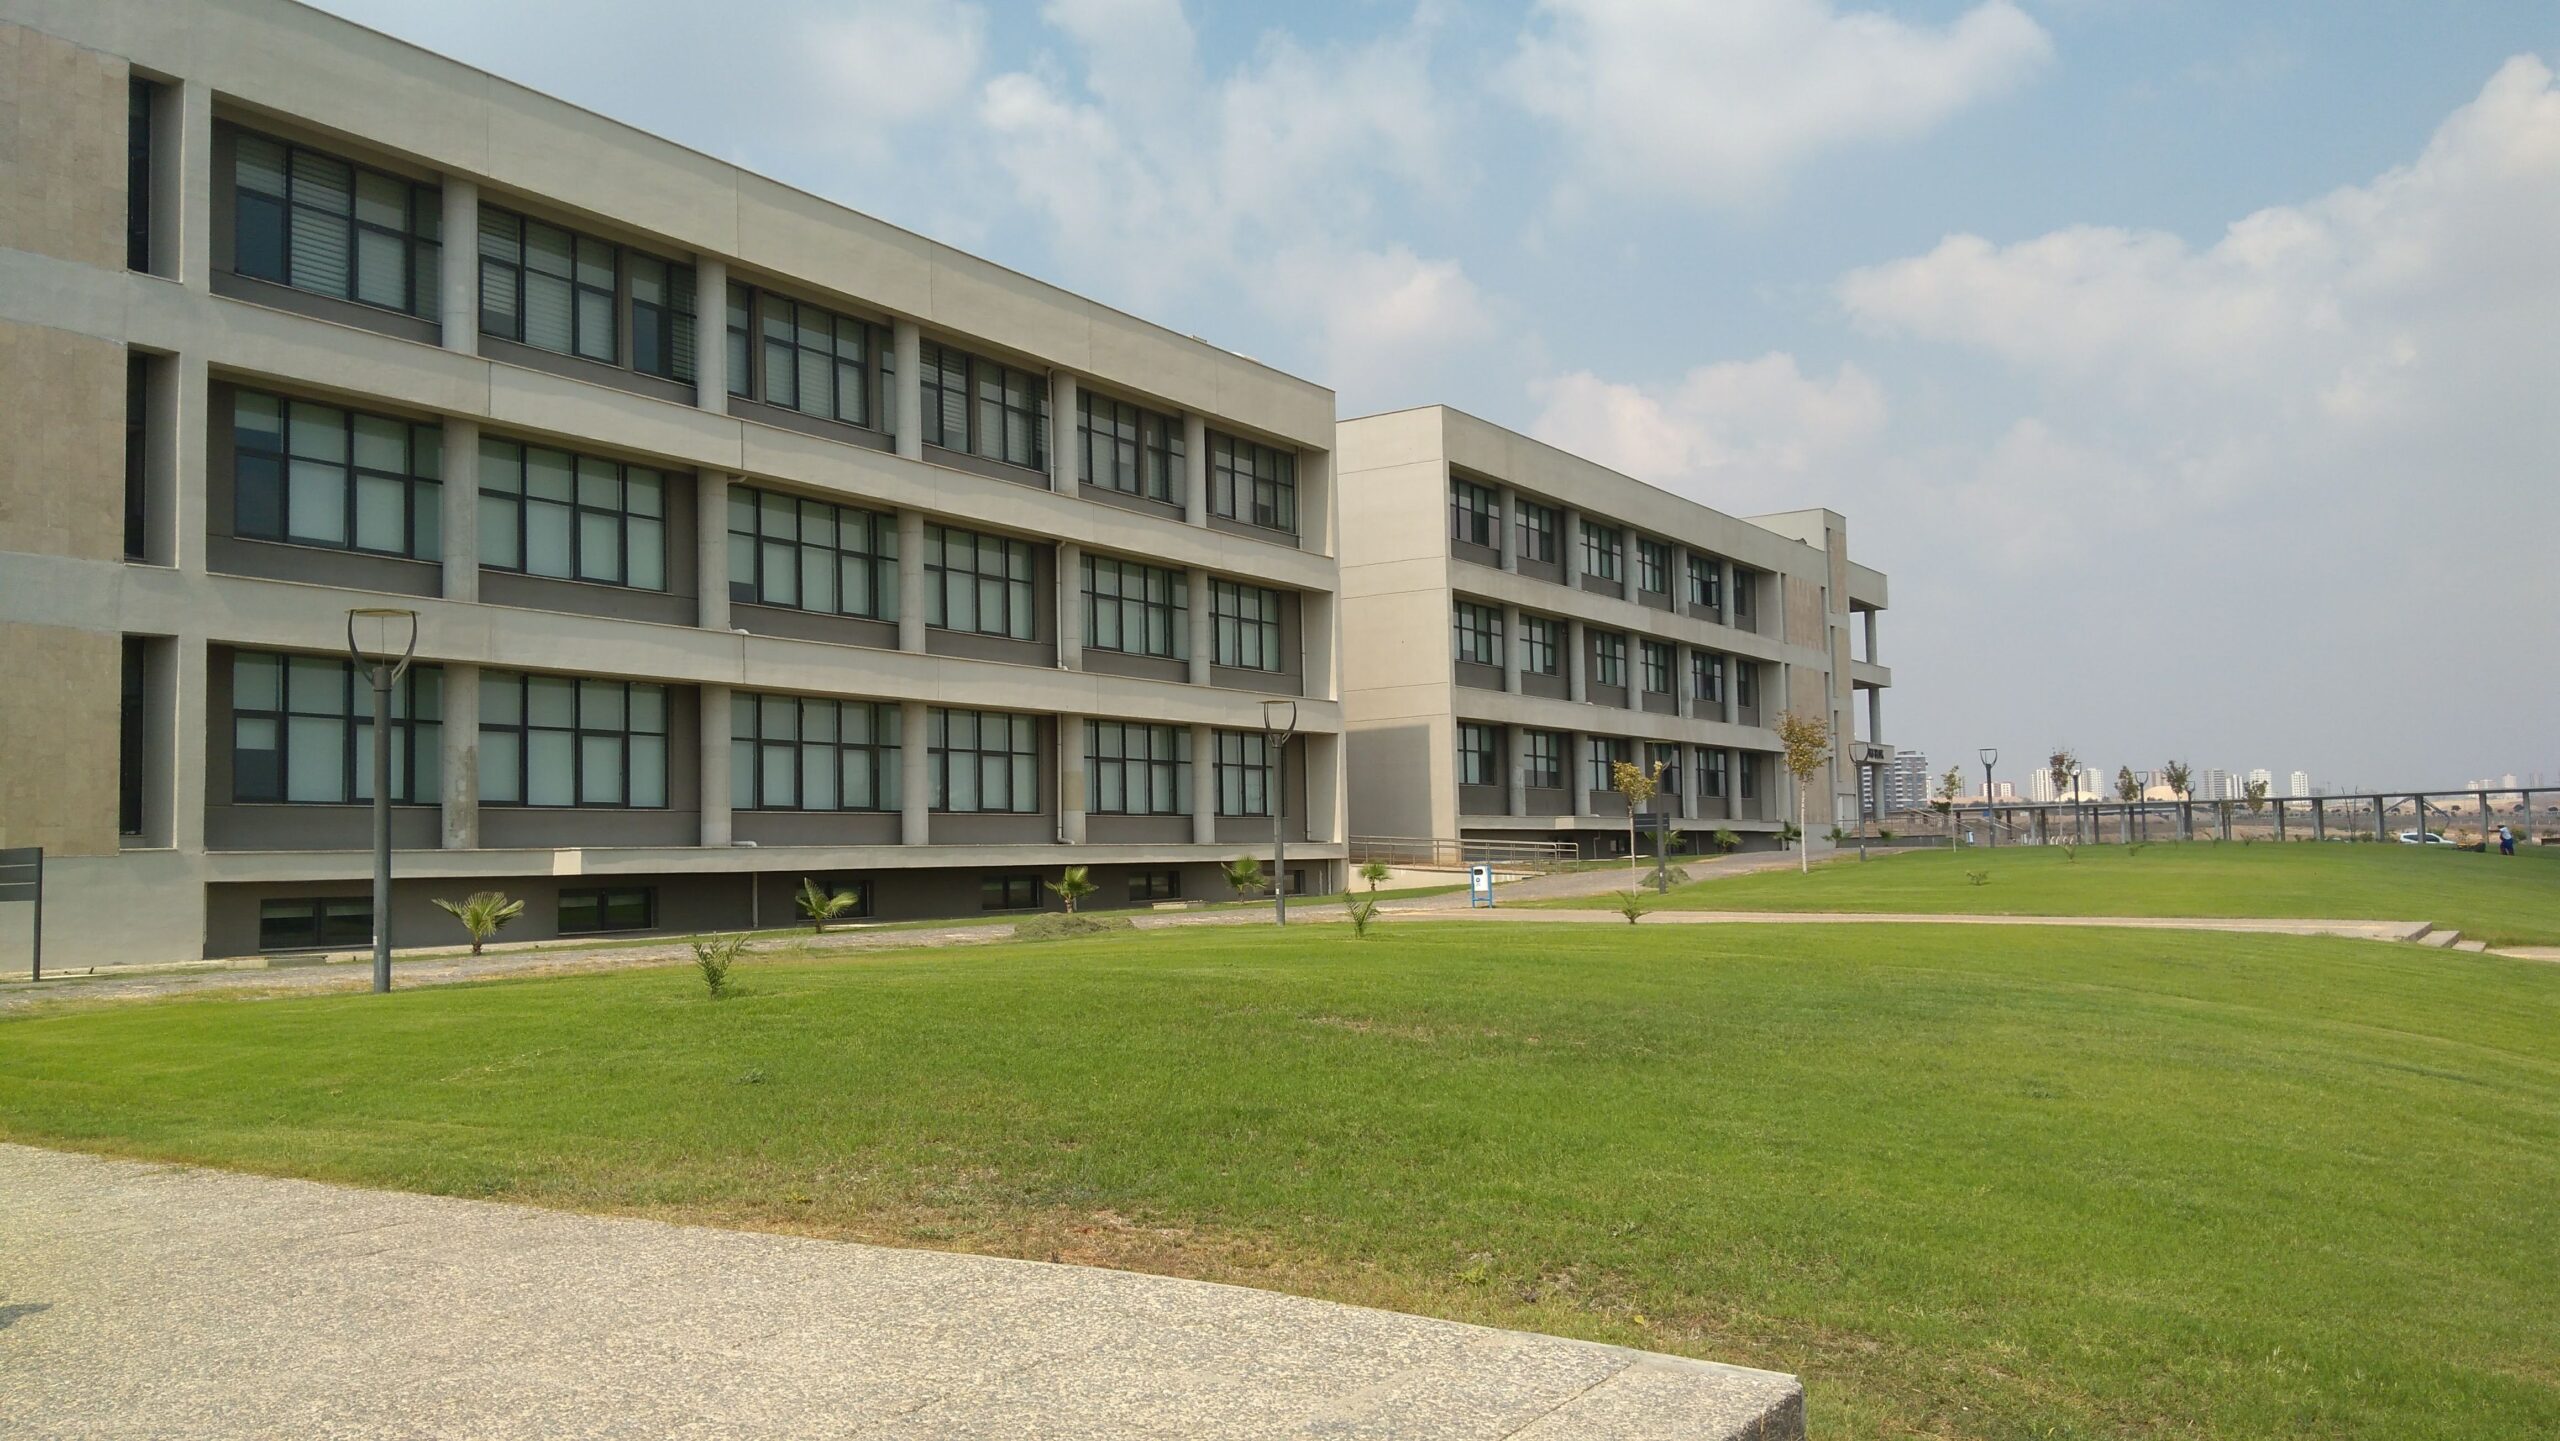 adana universitesi find and study 8 scaled - L'université des sciences et technologies d'Adana Alparslan